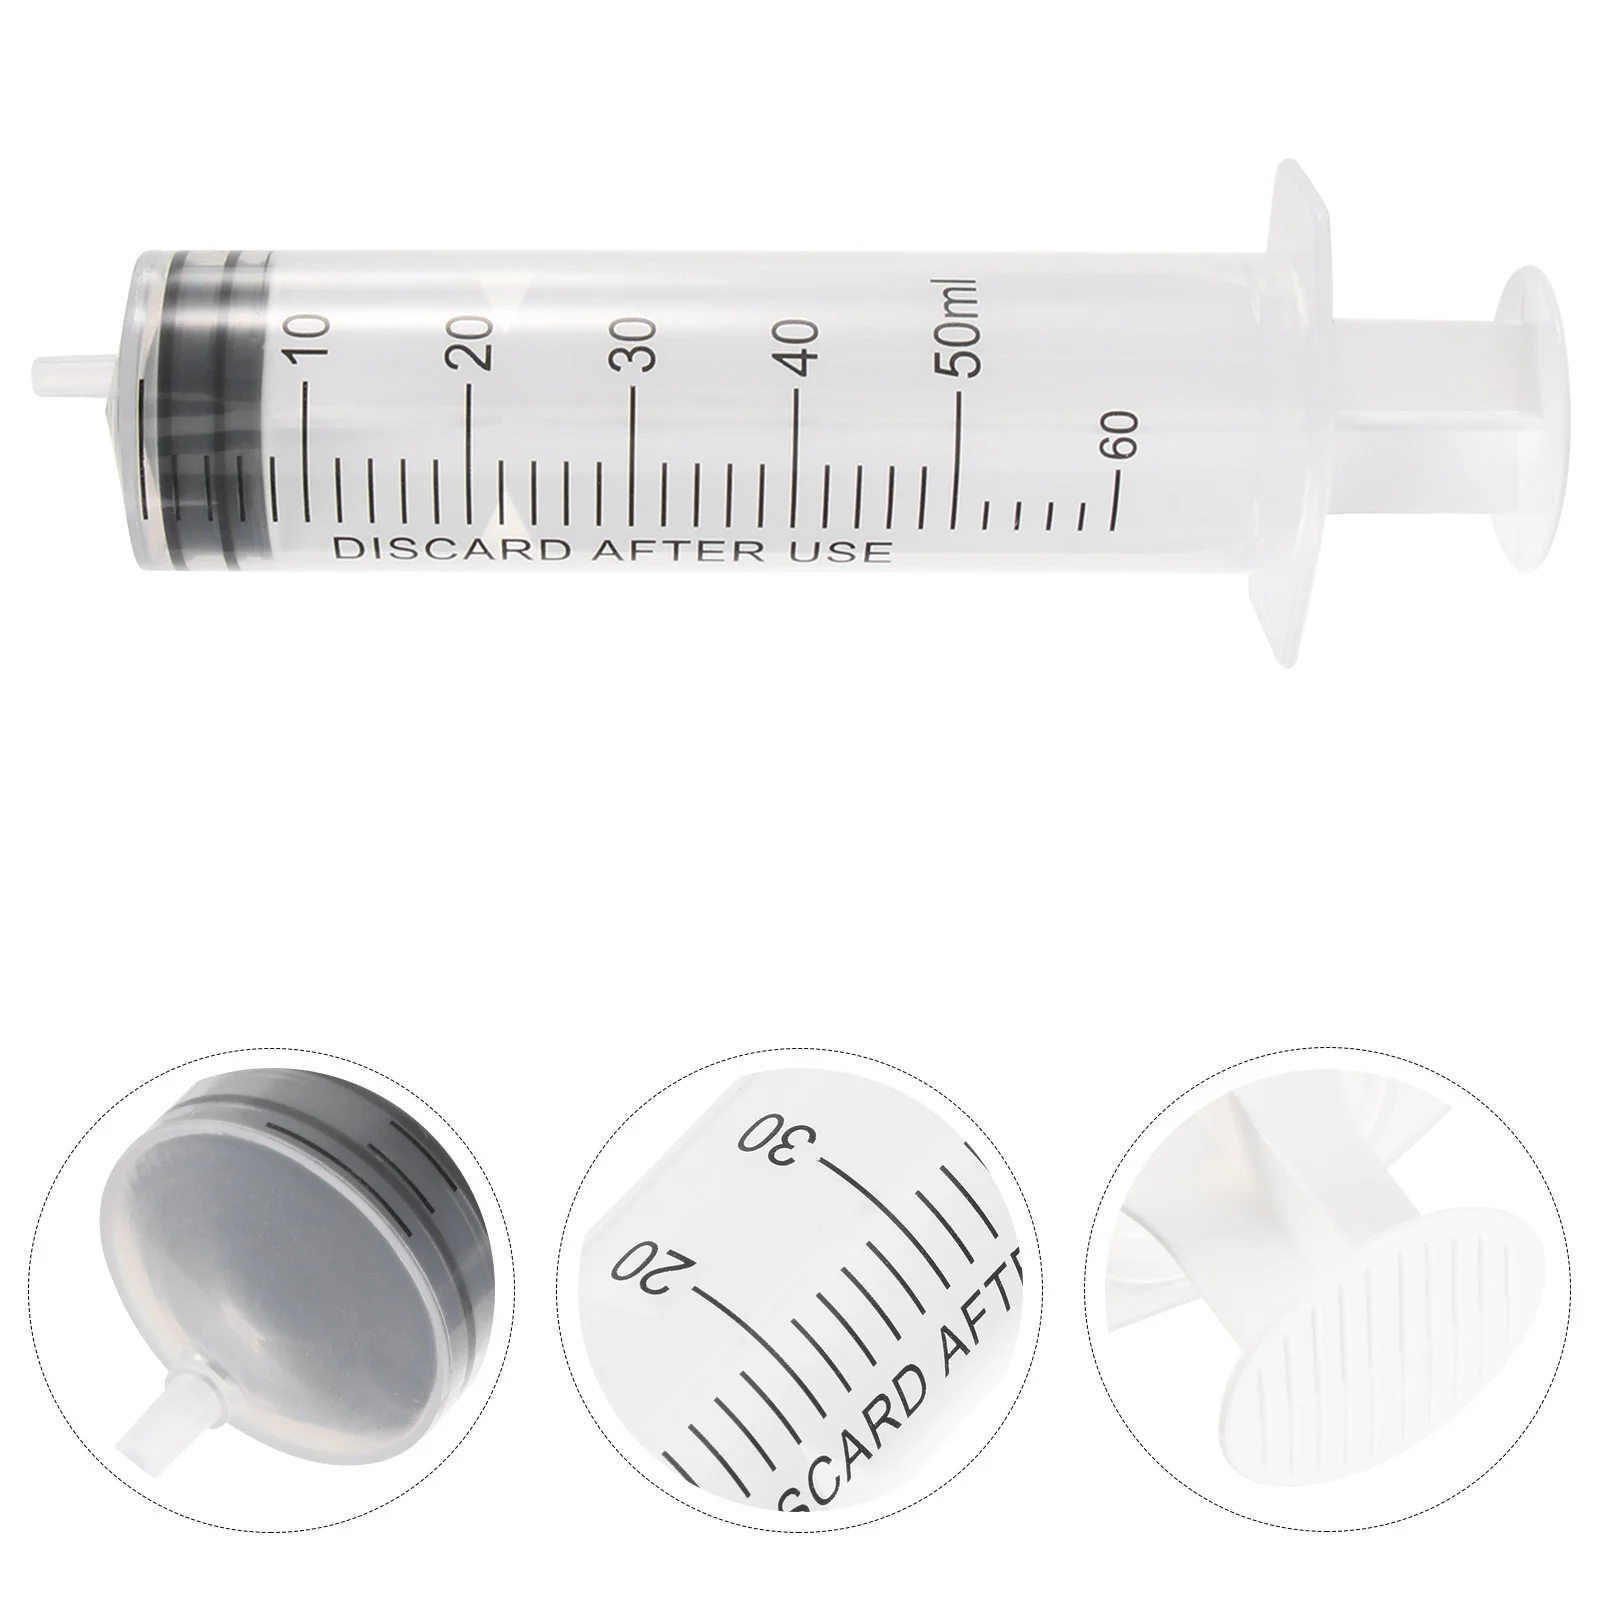 

Syringe Glue Liquid Applicator Measuring Lock Supplies Scientific Liquids Droppers Injector 60Ml Ink Refilling 20Ml